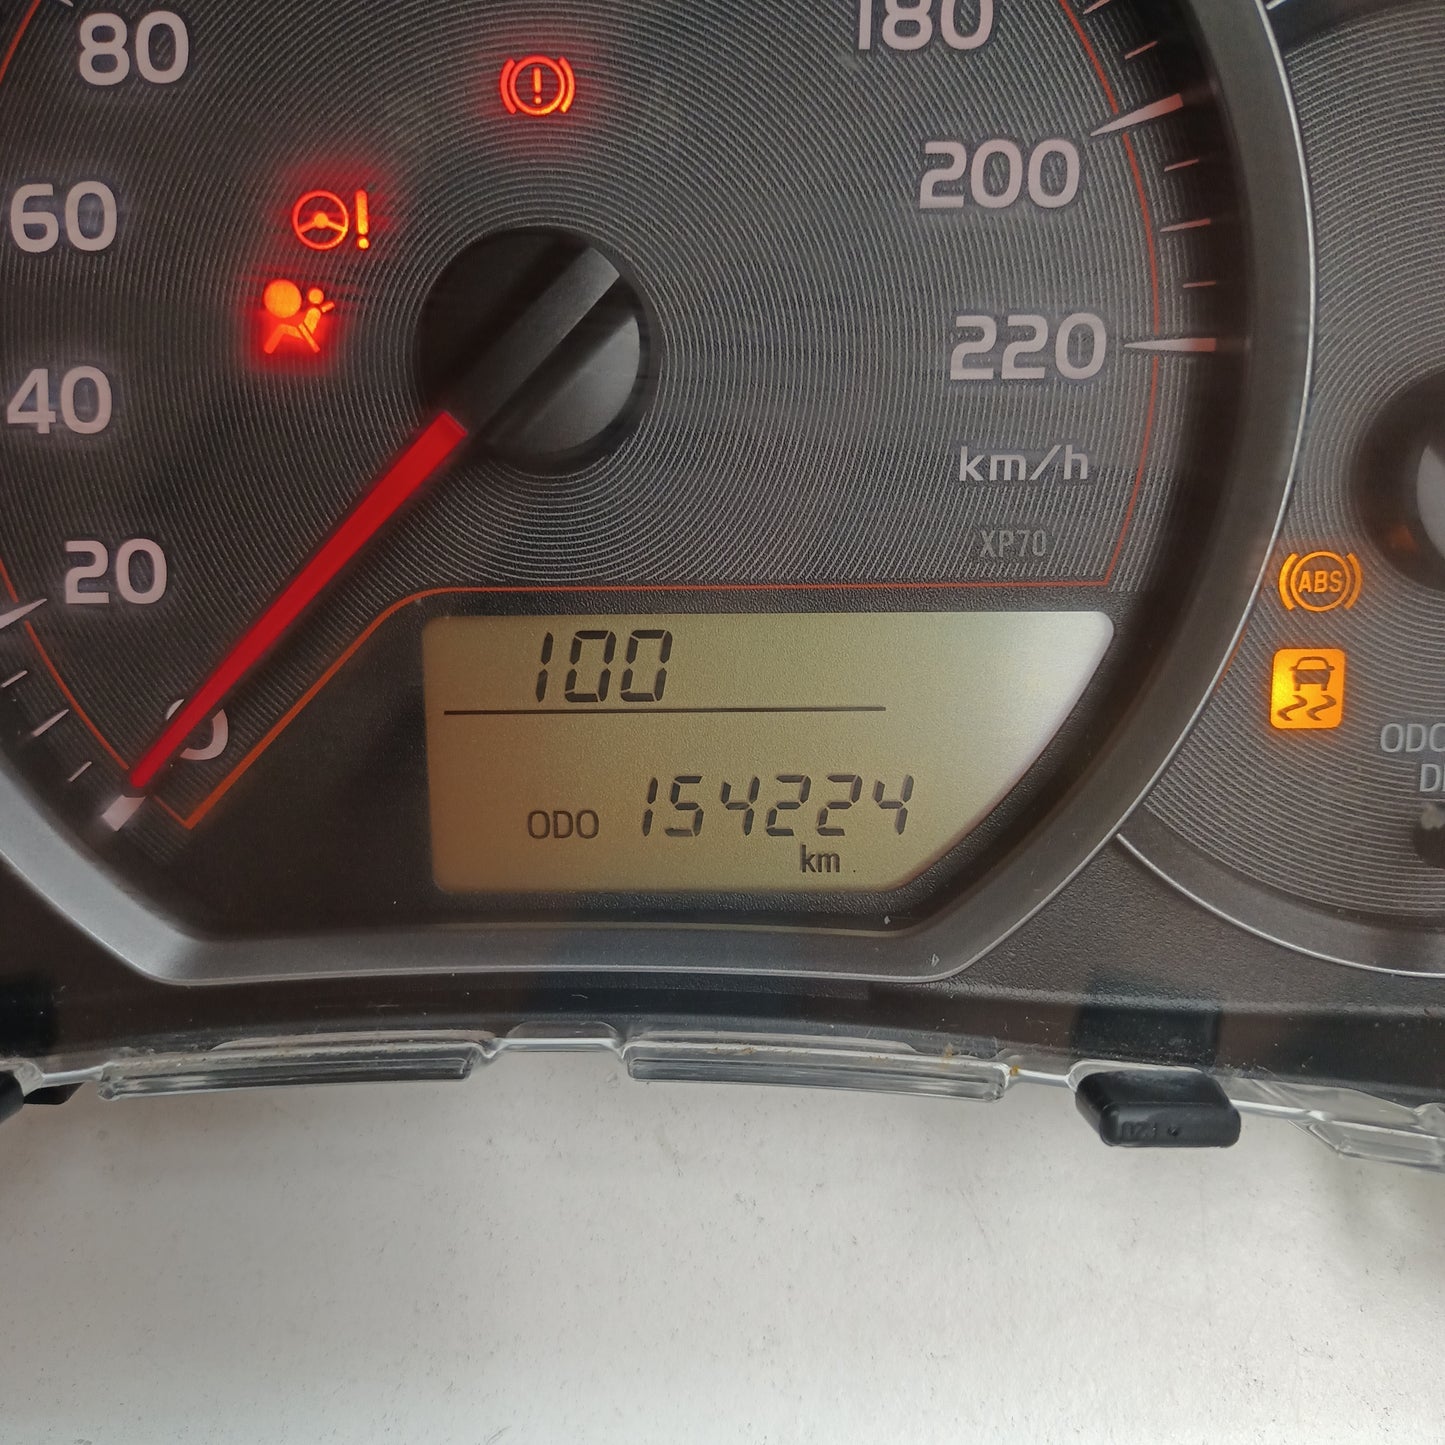 Toyota Yaris Hatchback Instrument Cluster NCP13# 2011 2012 2013 2014 154224 km